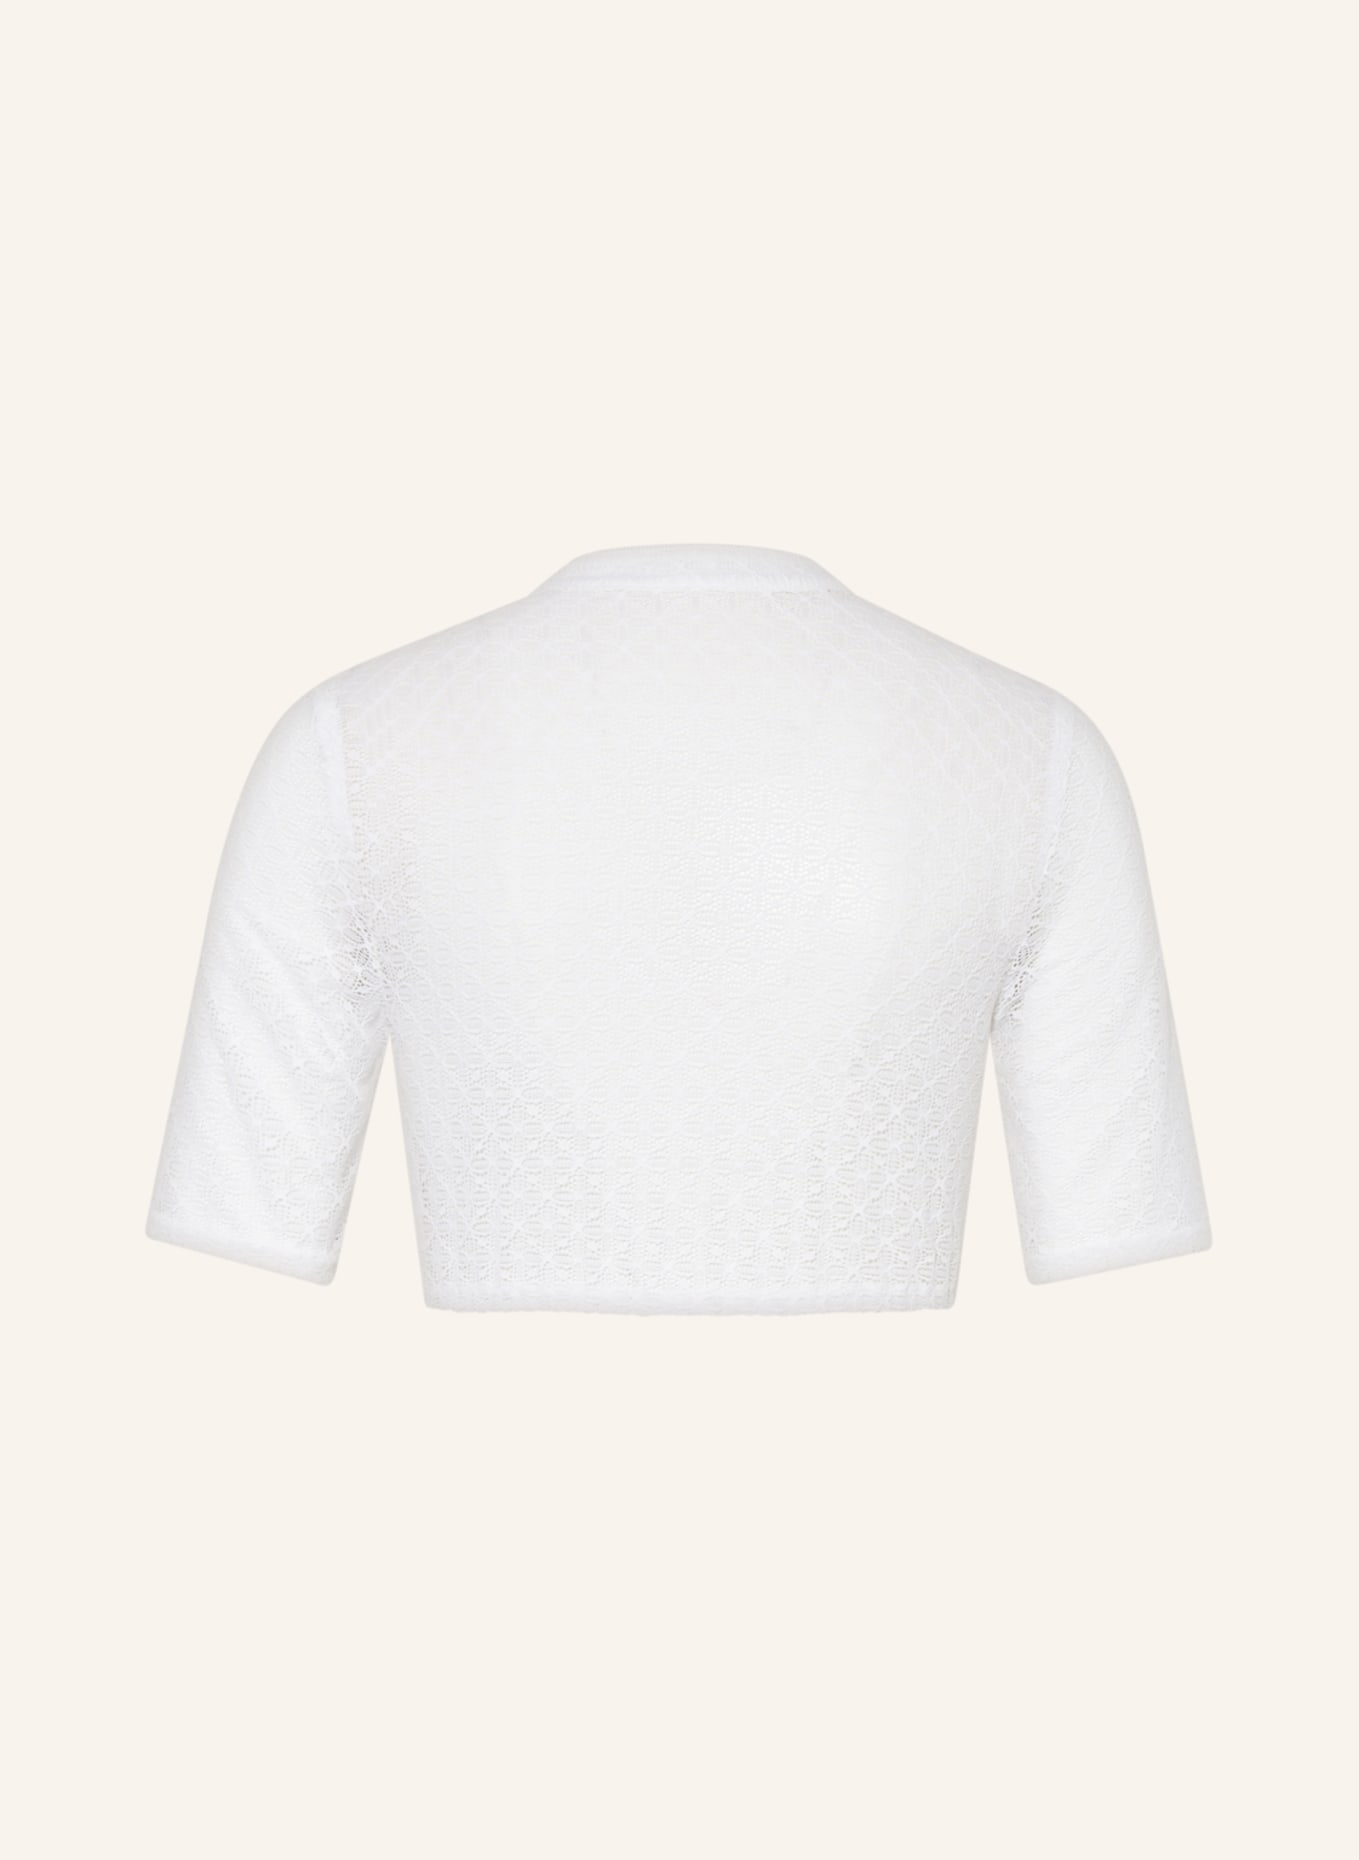 WALDORFF Dirndl blouse, Color: CREAM (Image 2)